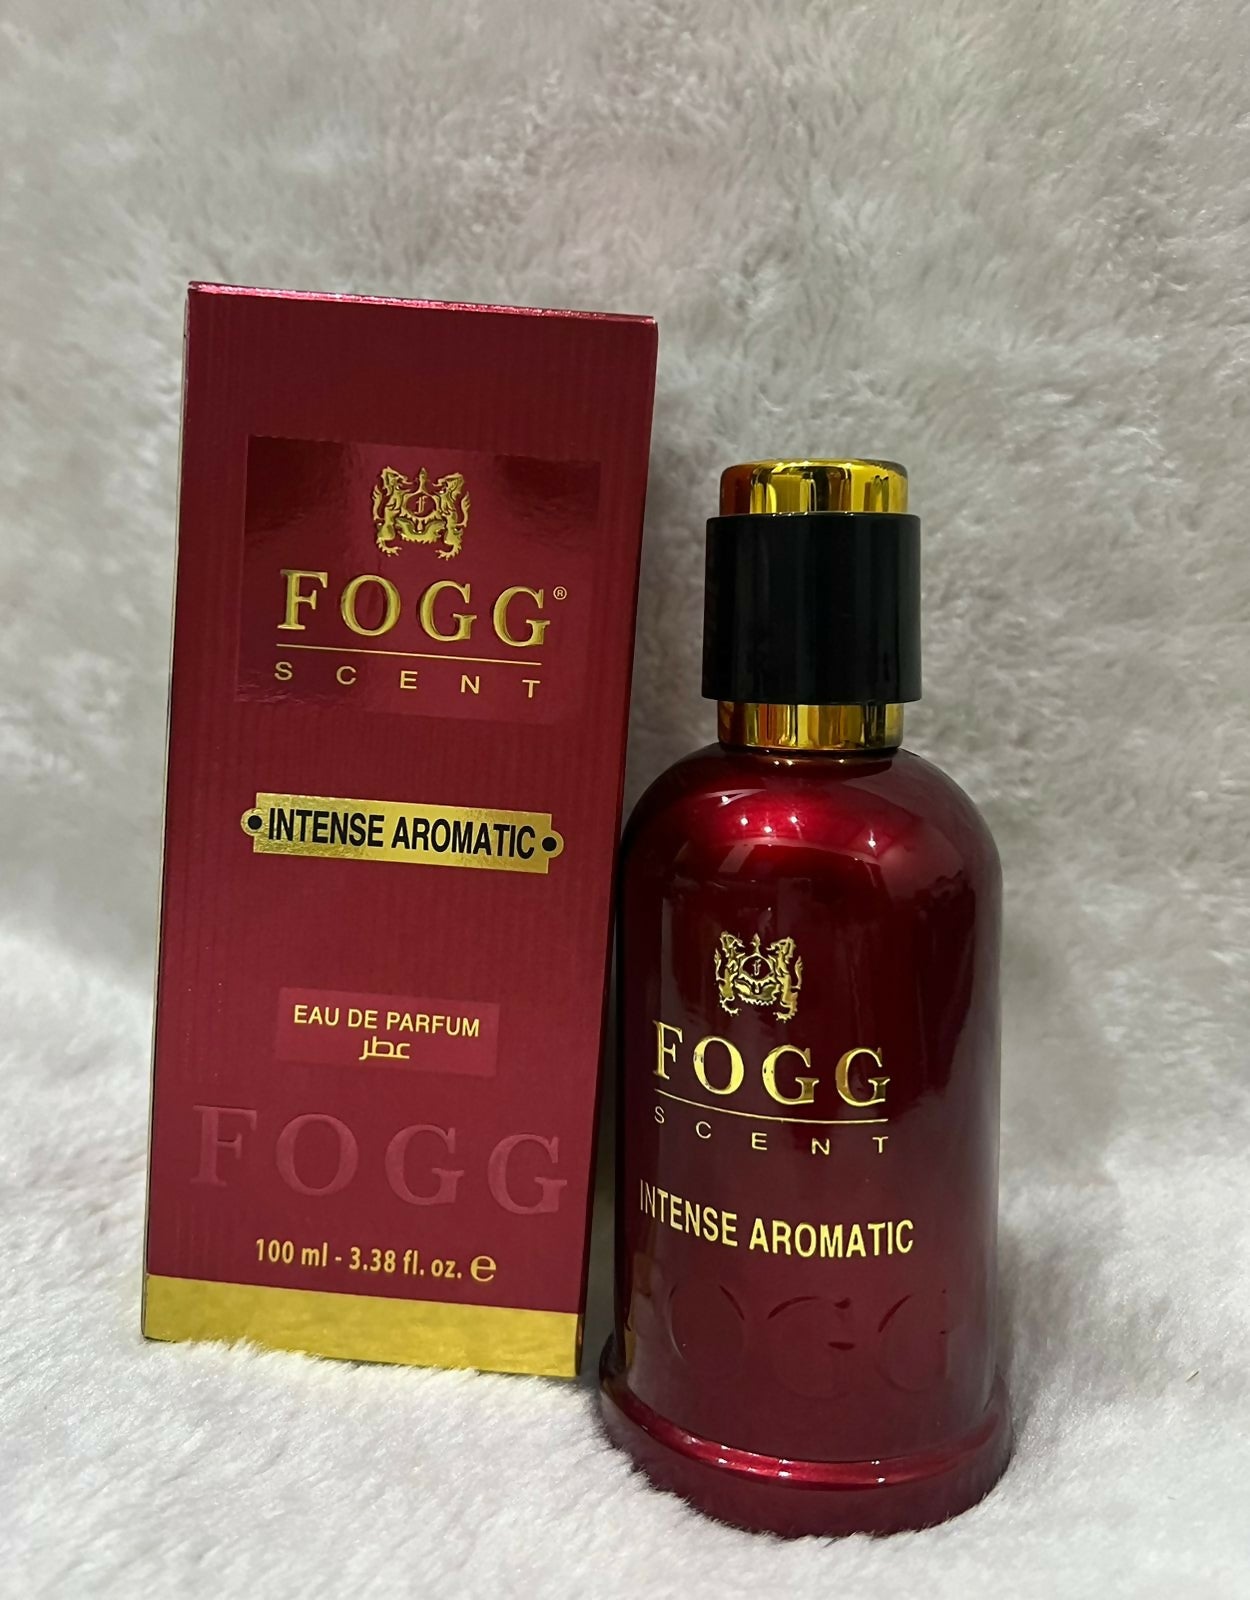 Fogg Scent Intense Aromatic Perfume for Men 100ml